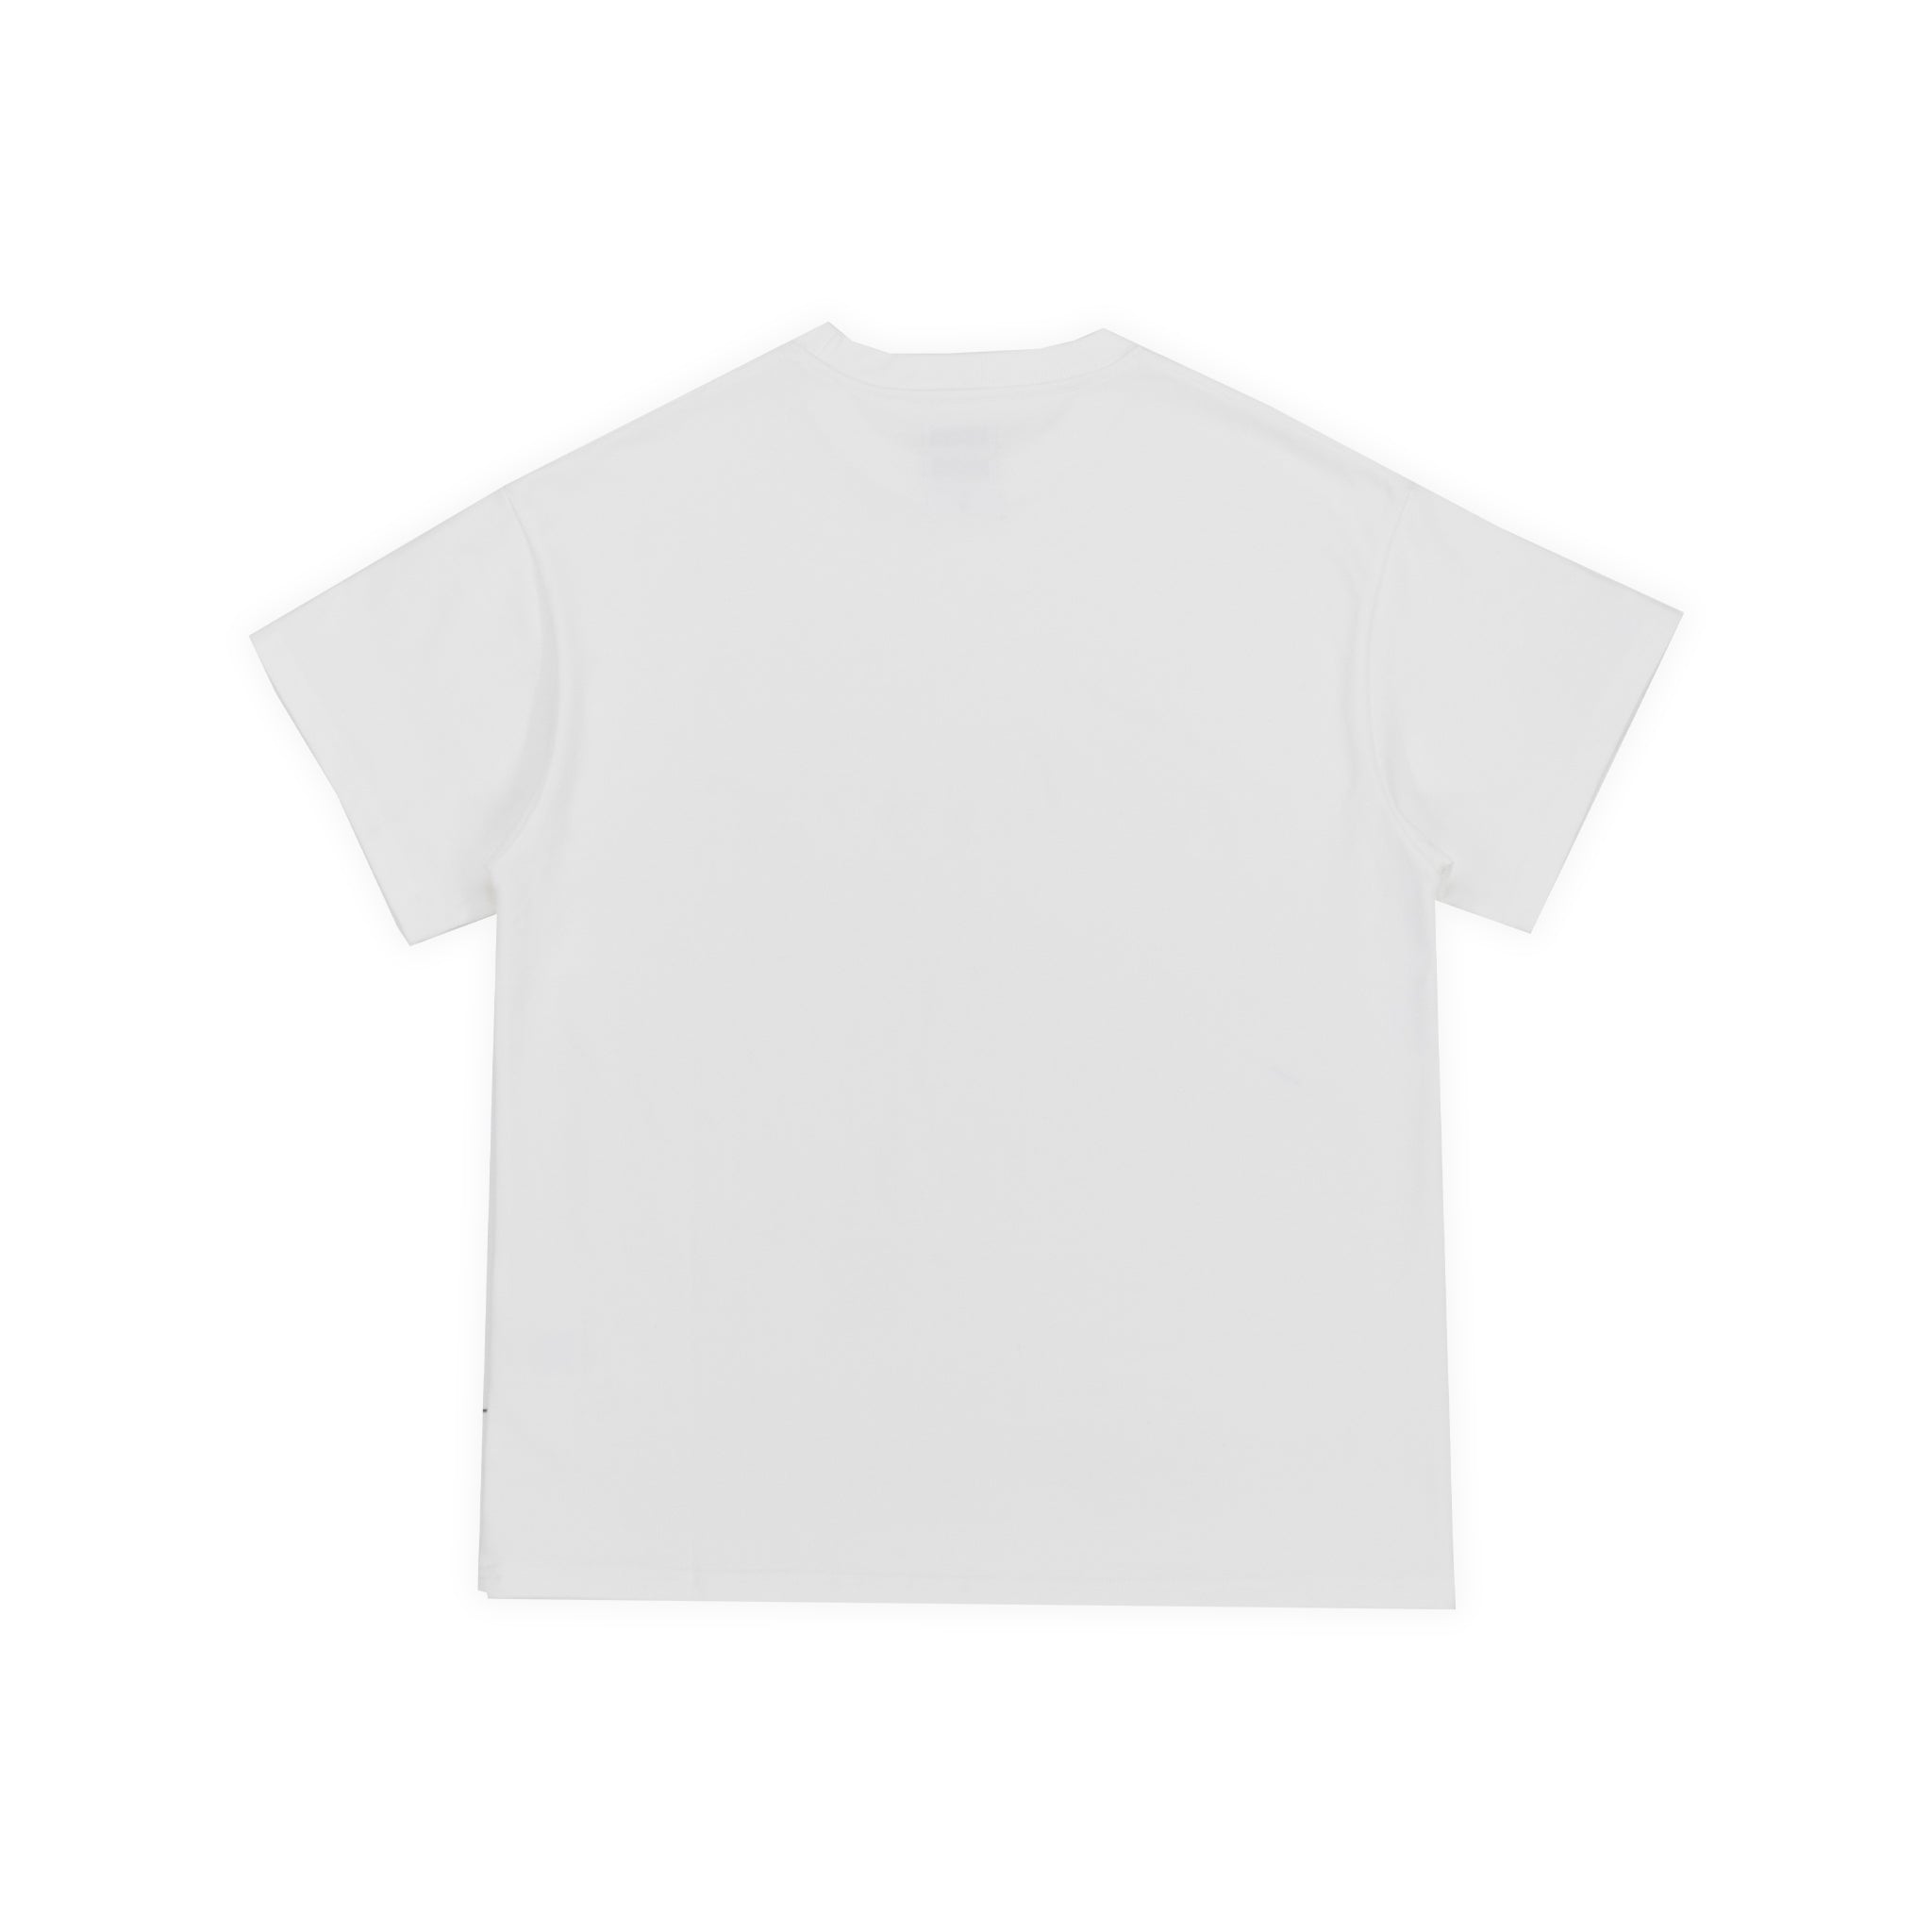 "Good Luck" T-Shirt - Cotton (WHITE)